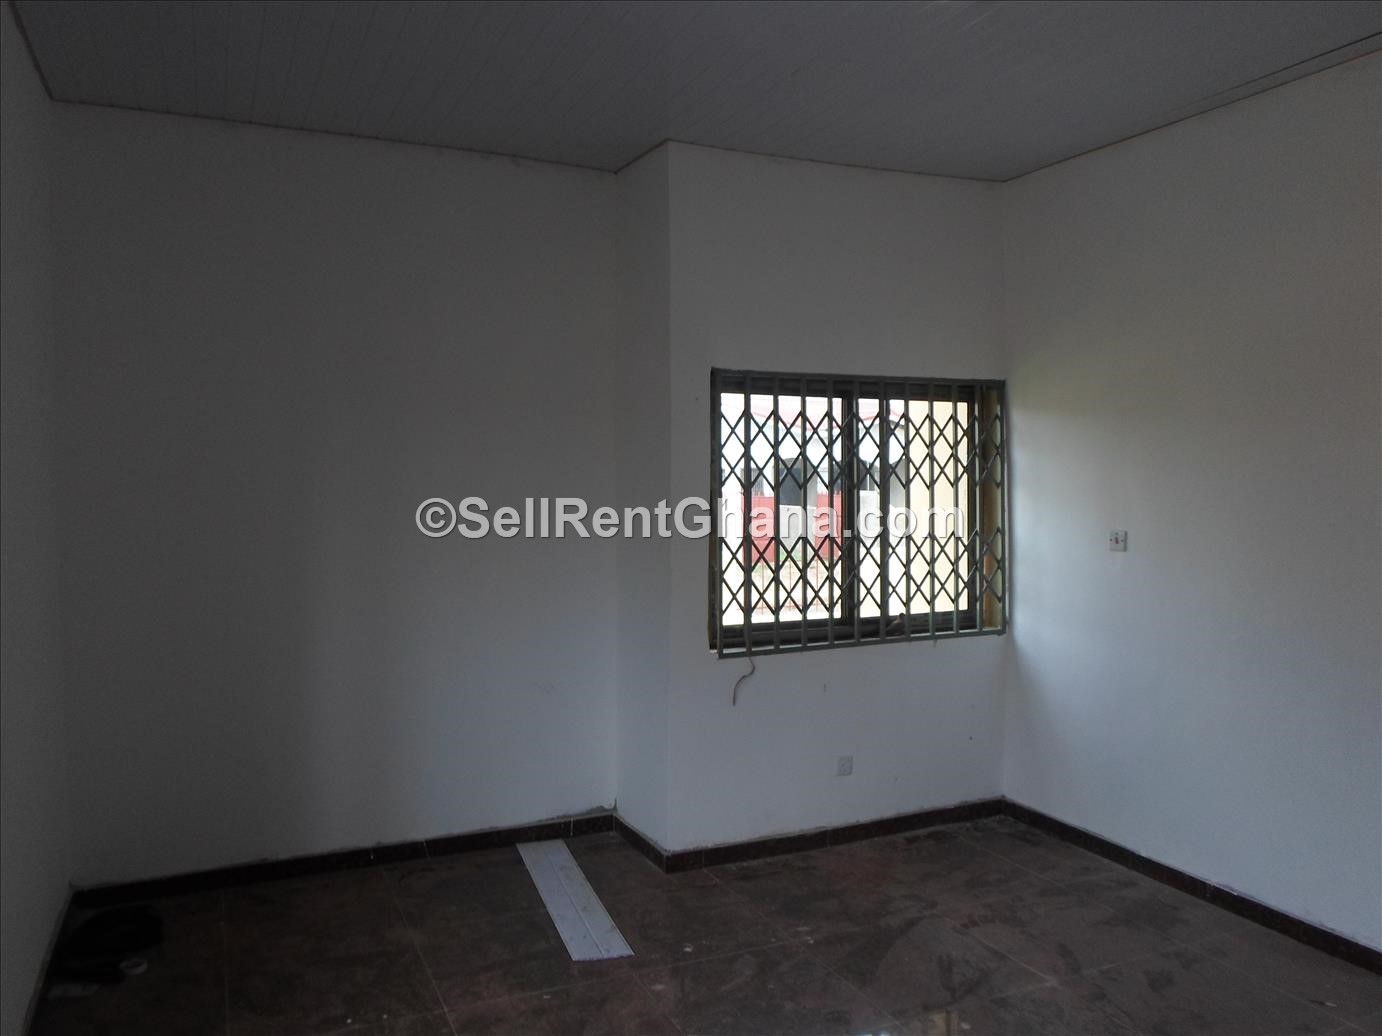 2 Bedroom Detached House, Tema Comm. 25 | SellRent Ghana